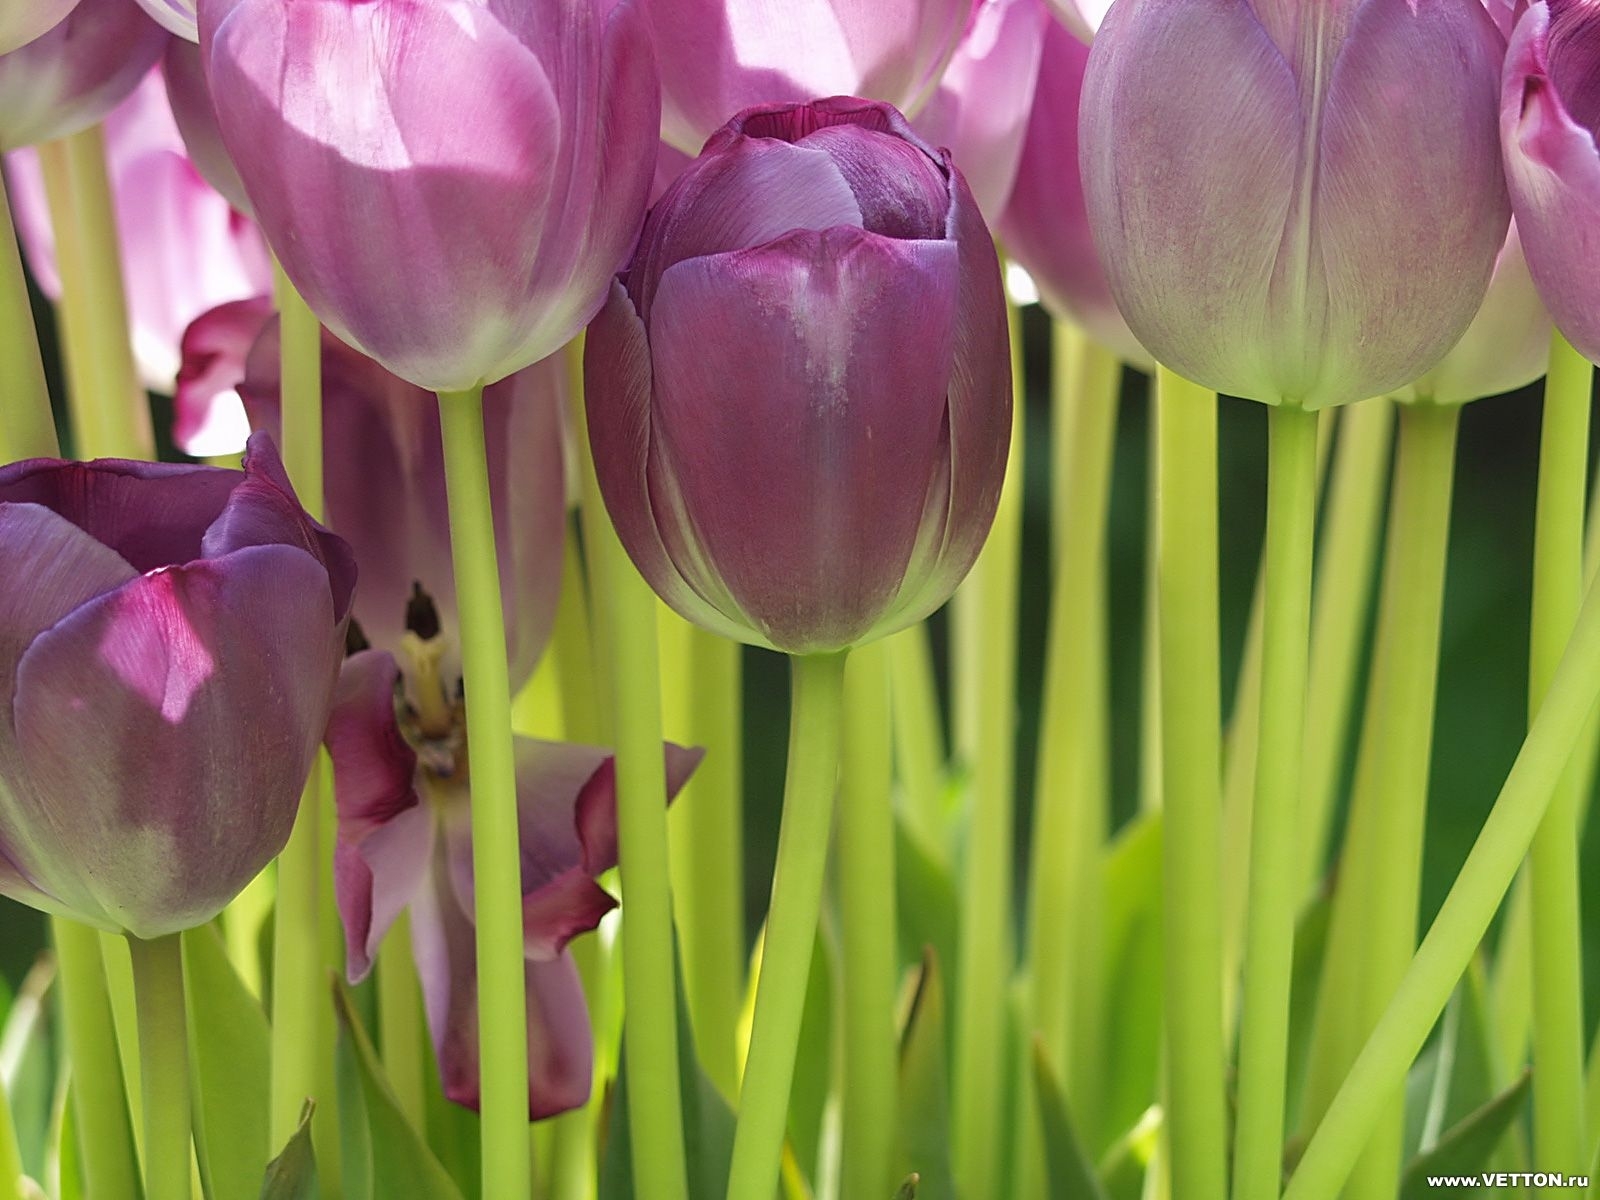 Descarga gratuita de fondo de pantalla para móvil de Plantas, Flores, Fondo, Tulipanes.